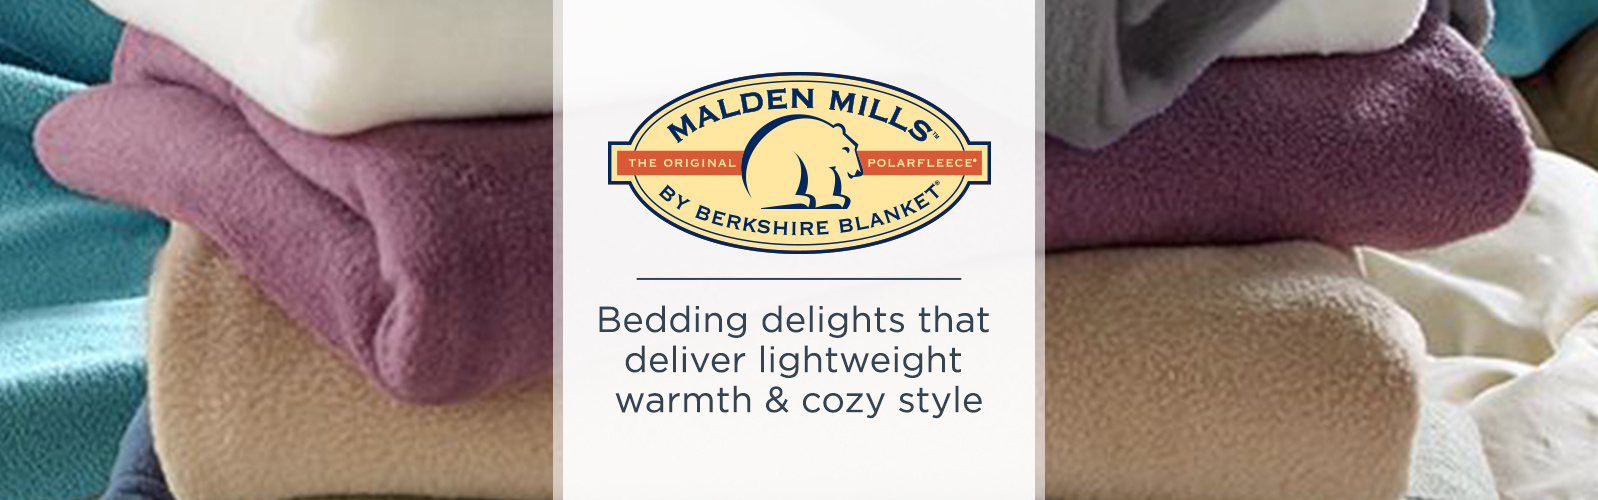 Malden Mills. Bedding delights that deliver lightweight warmth & cozy style